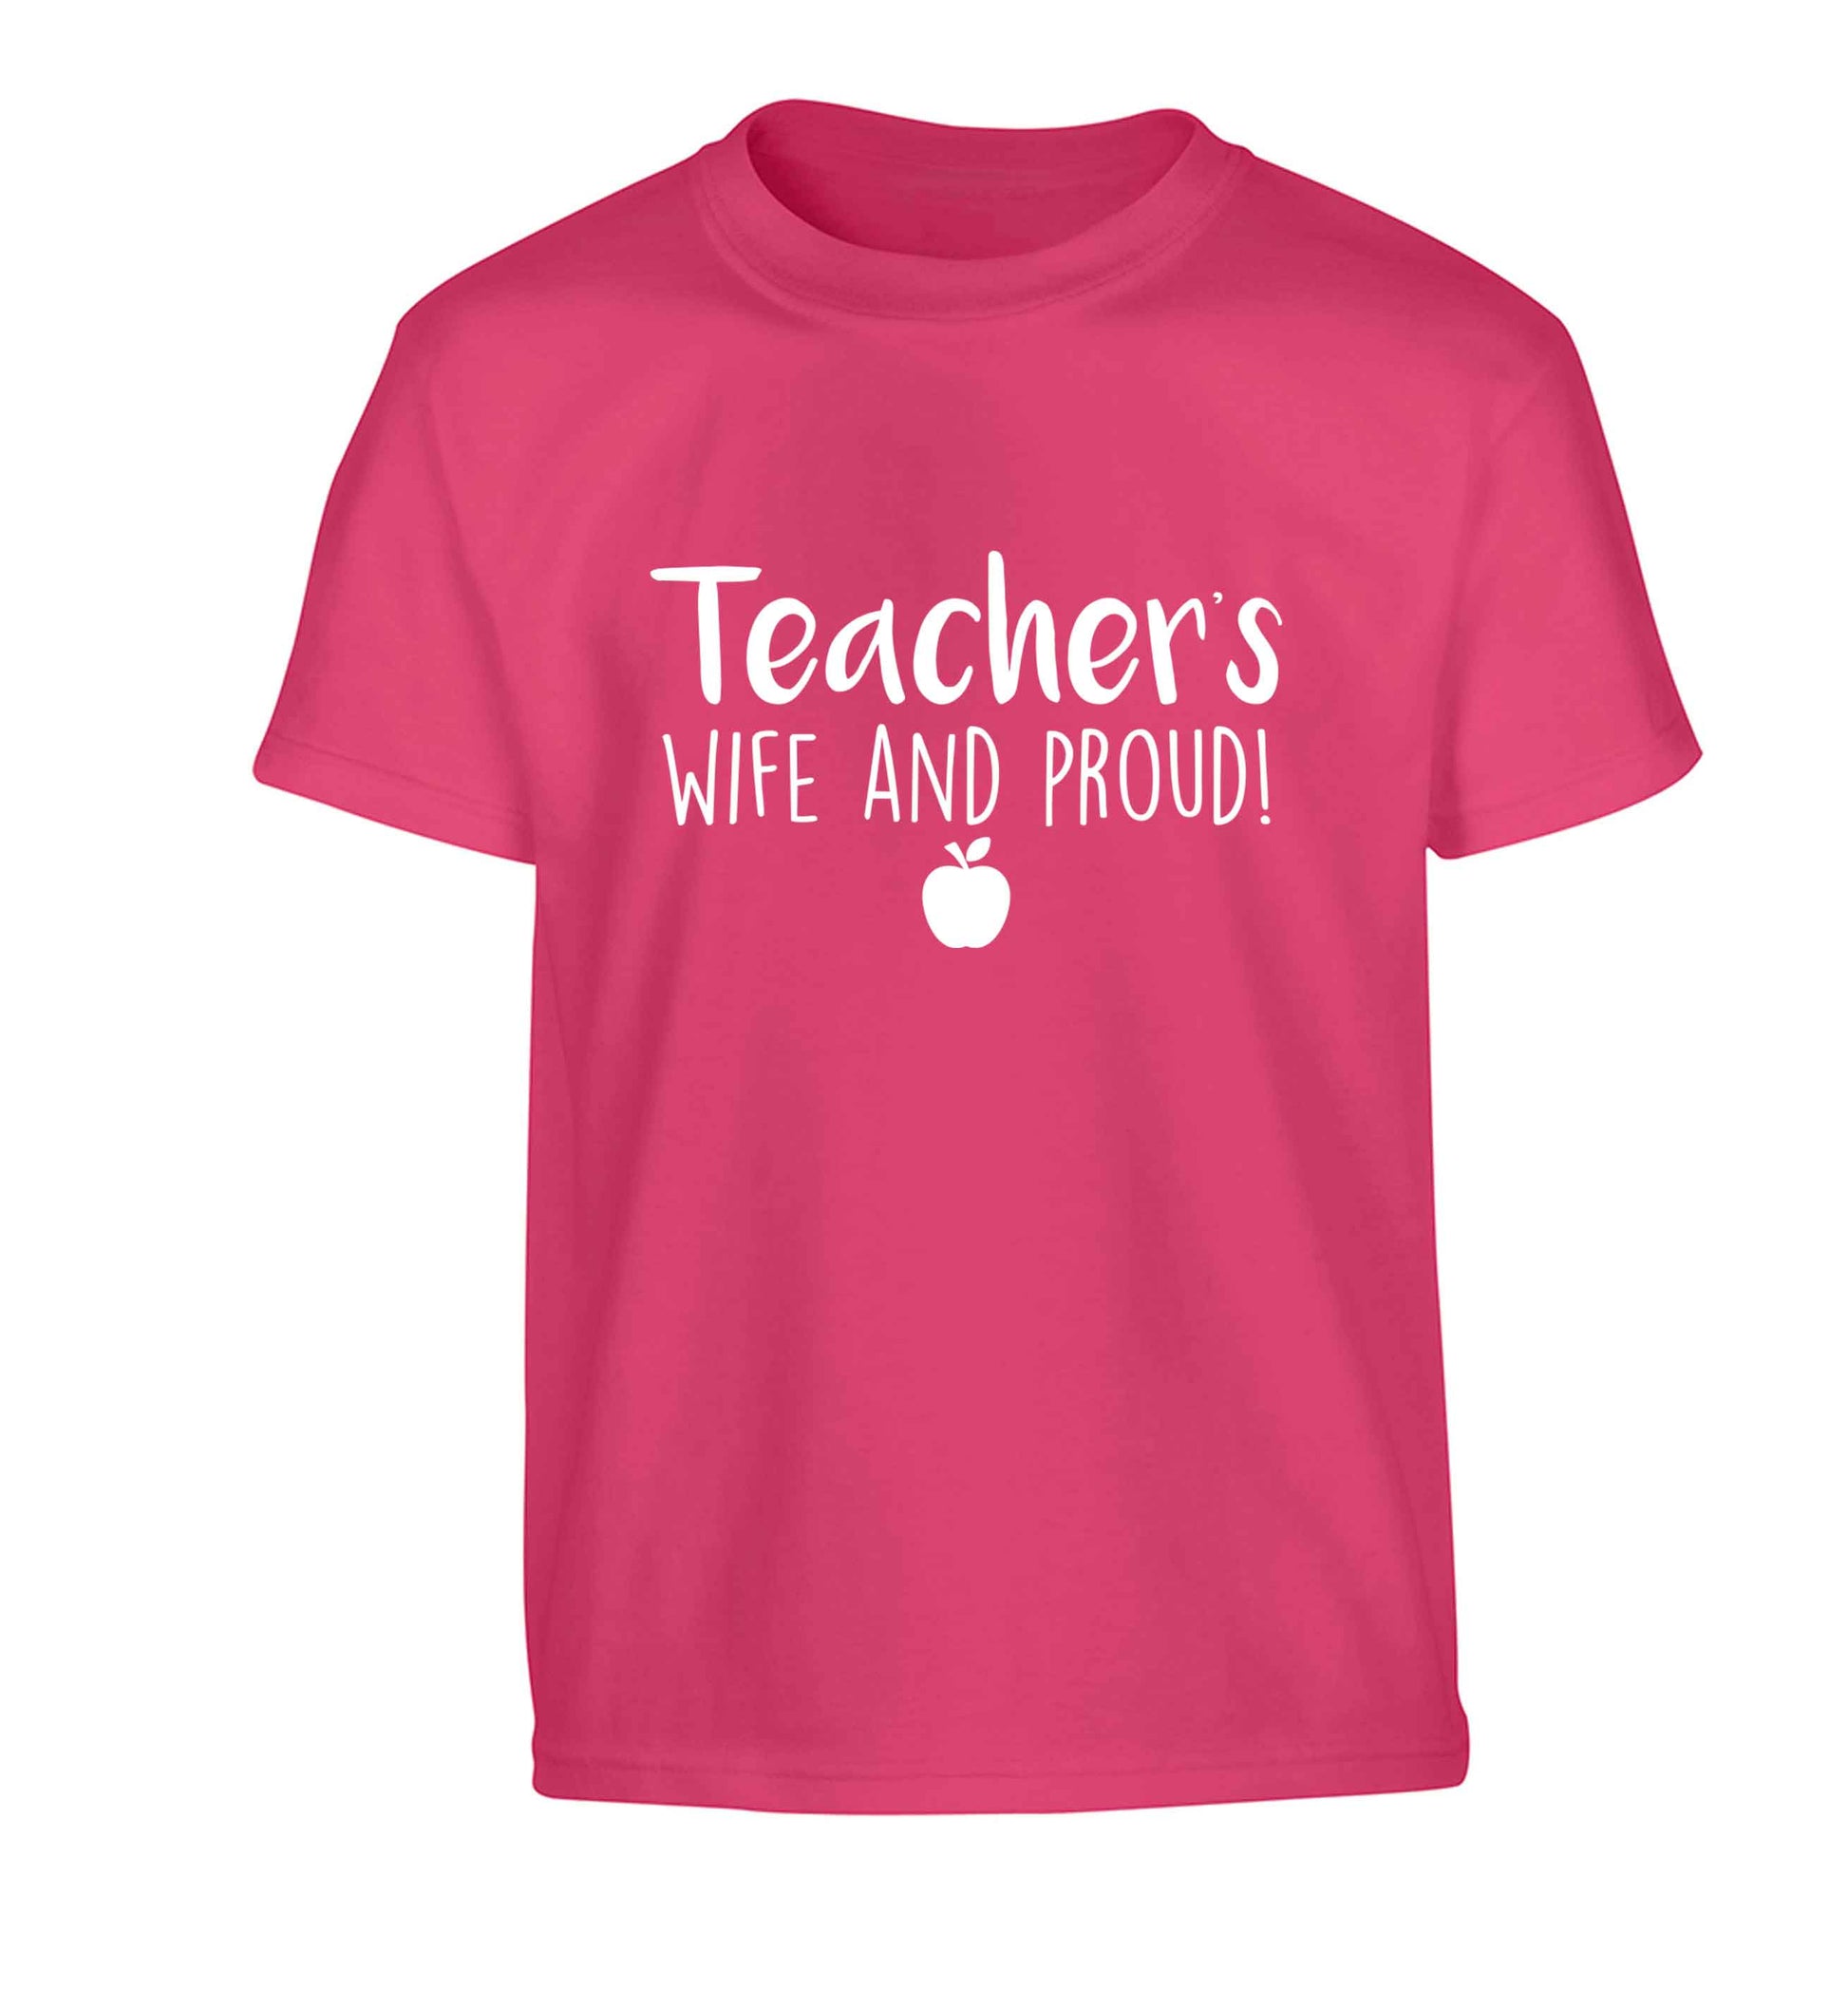 Teachers wife and proud Children's pink Tshirt 12-13 Years